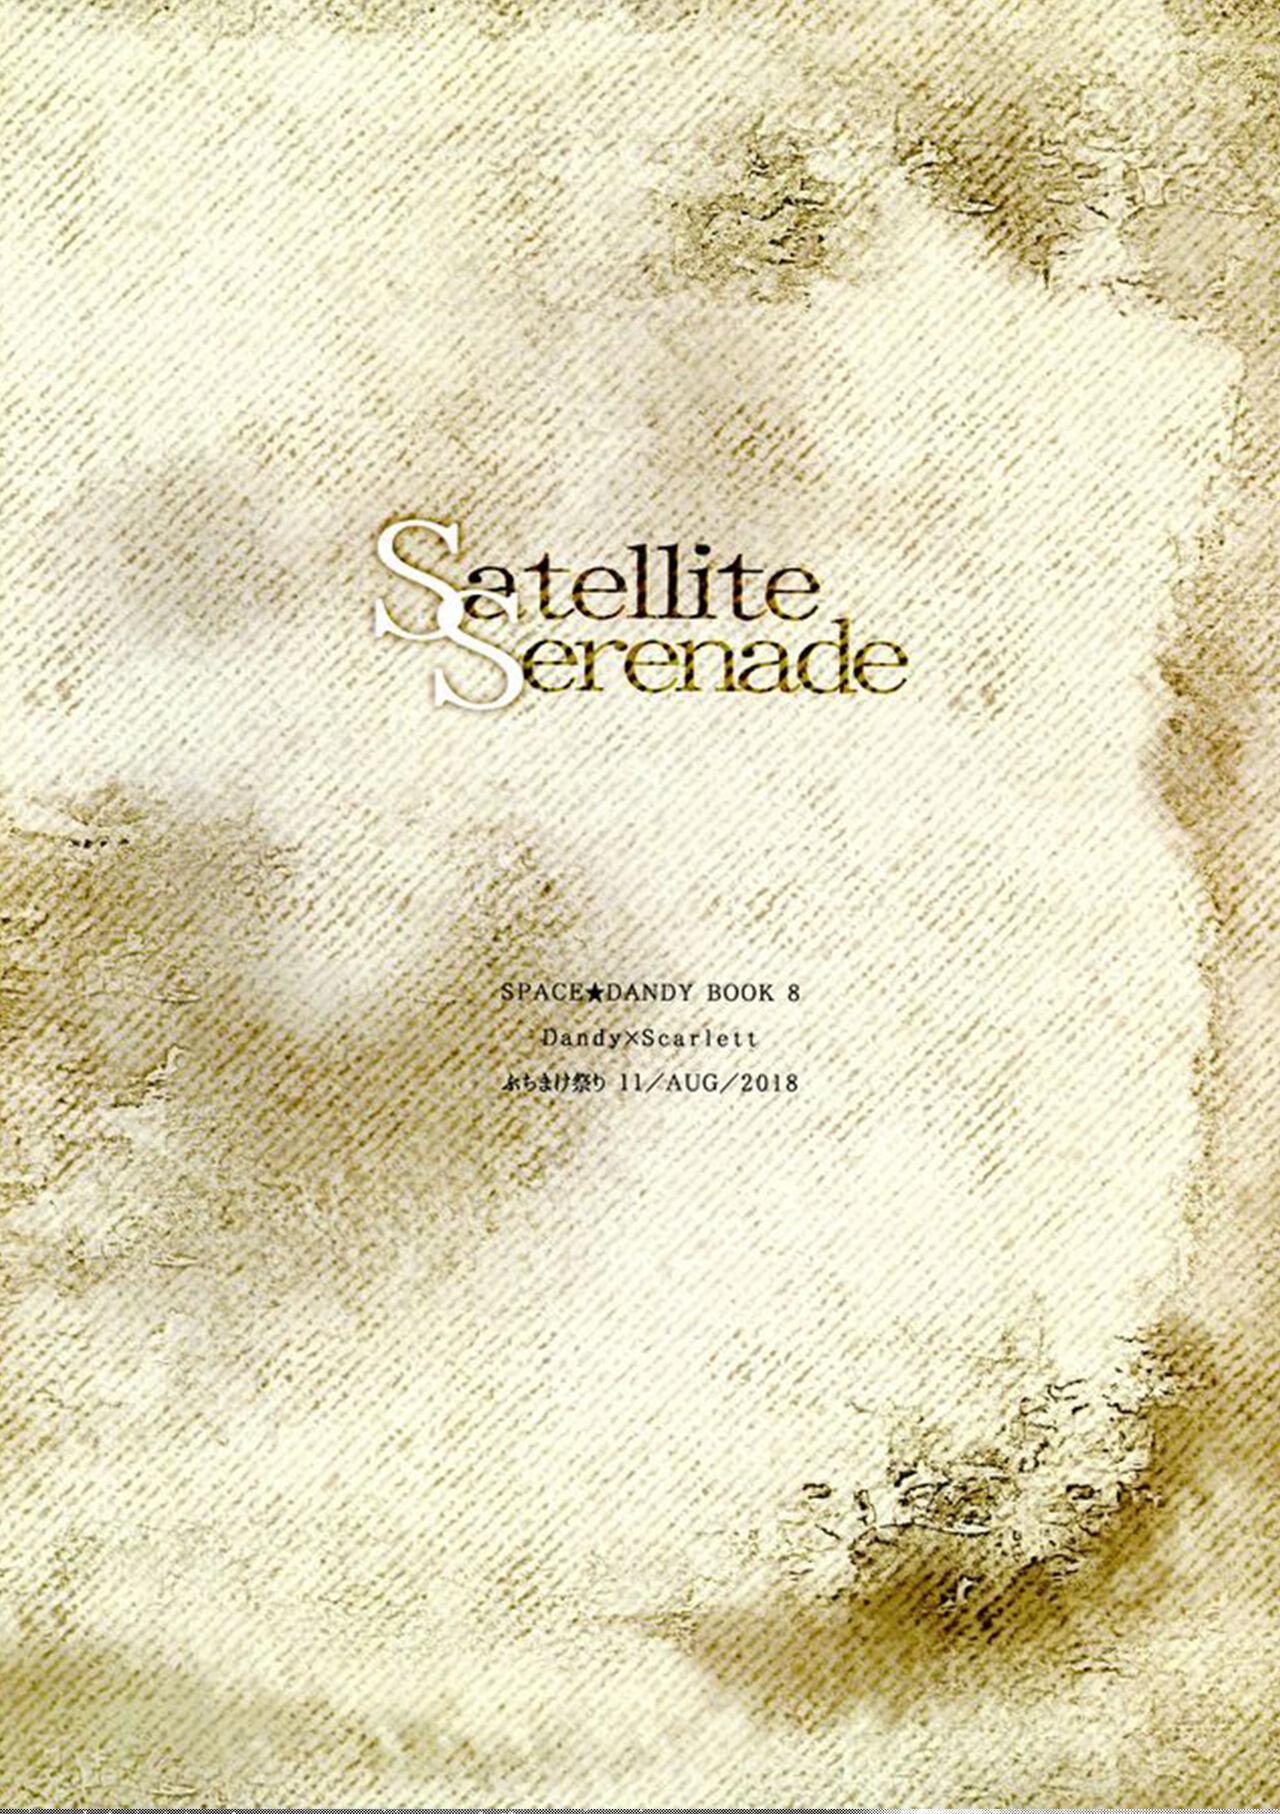 Satellite Serenade 42